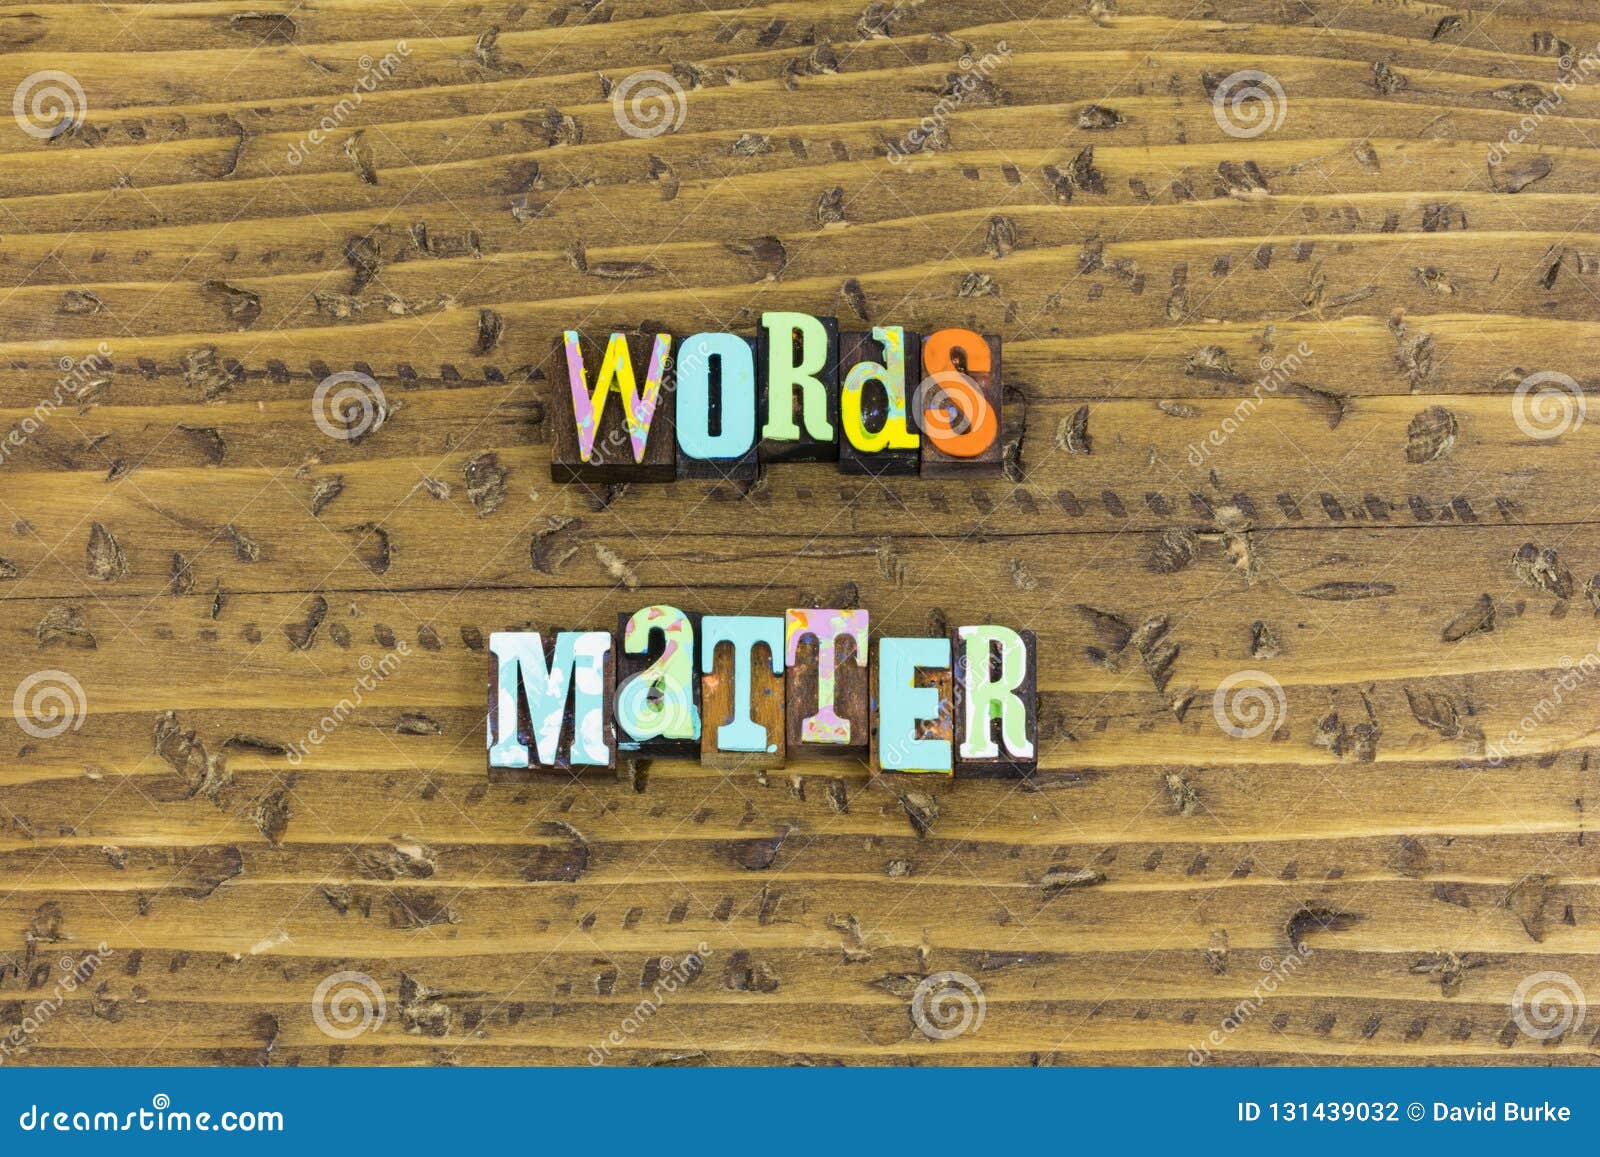 words matter understanding language communication honesty ethics